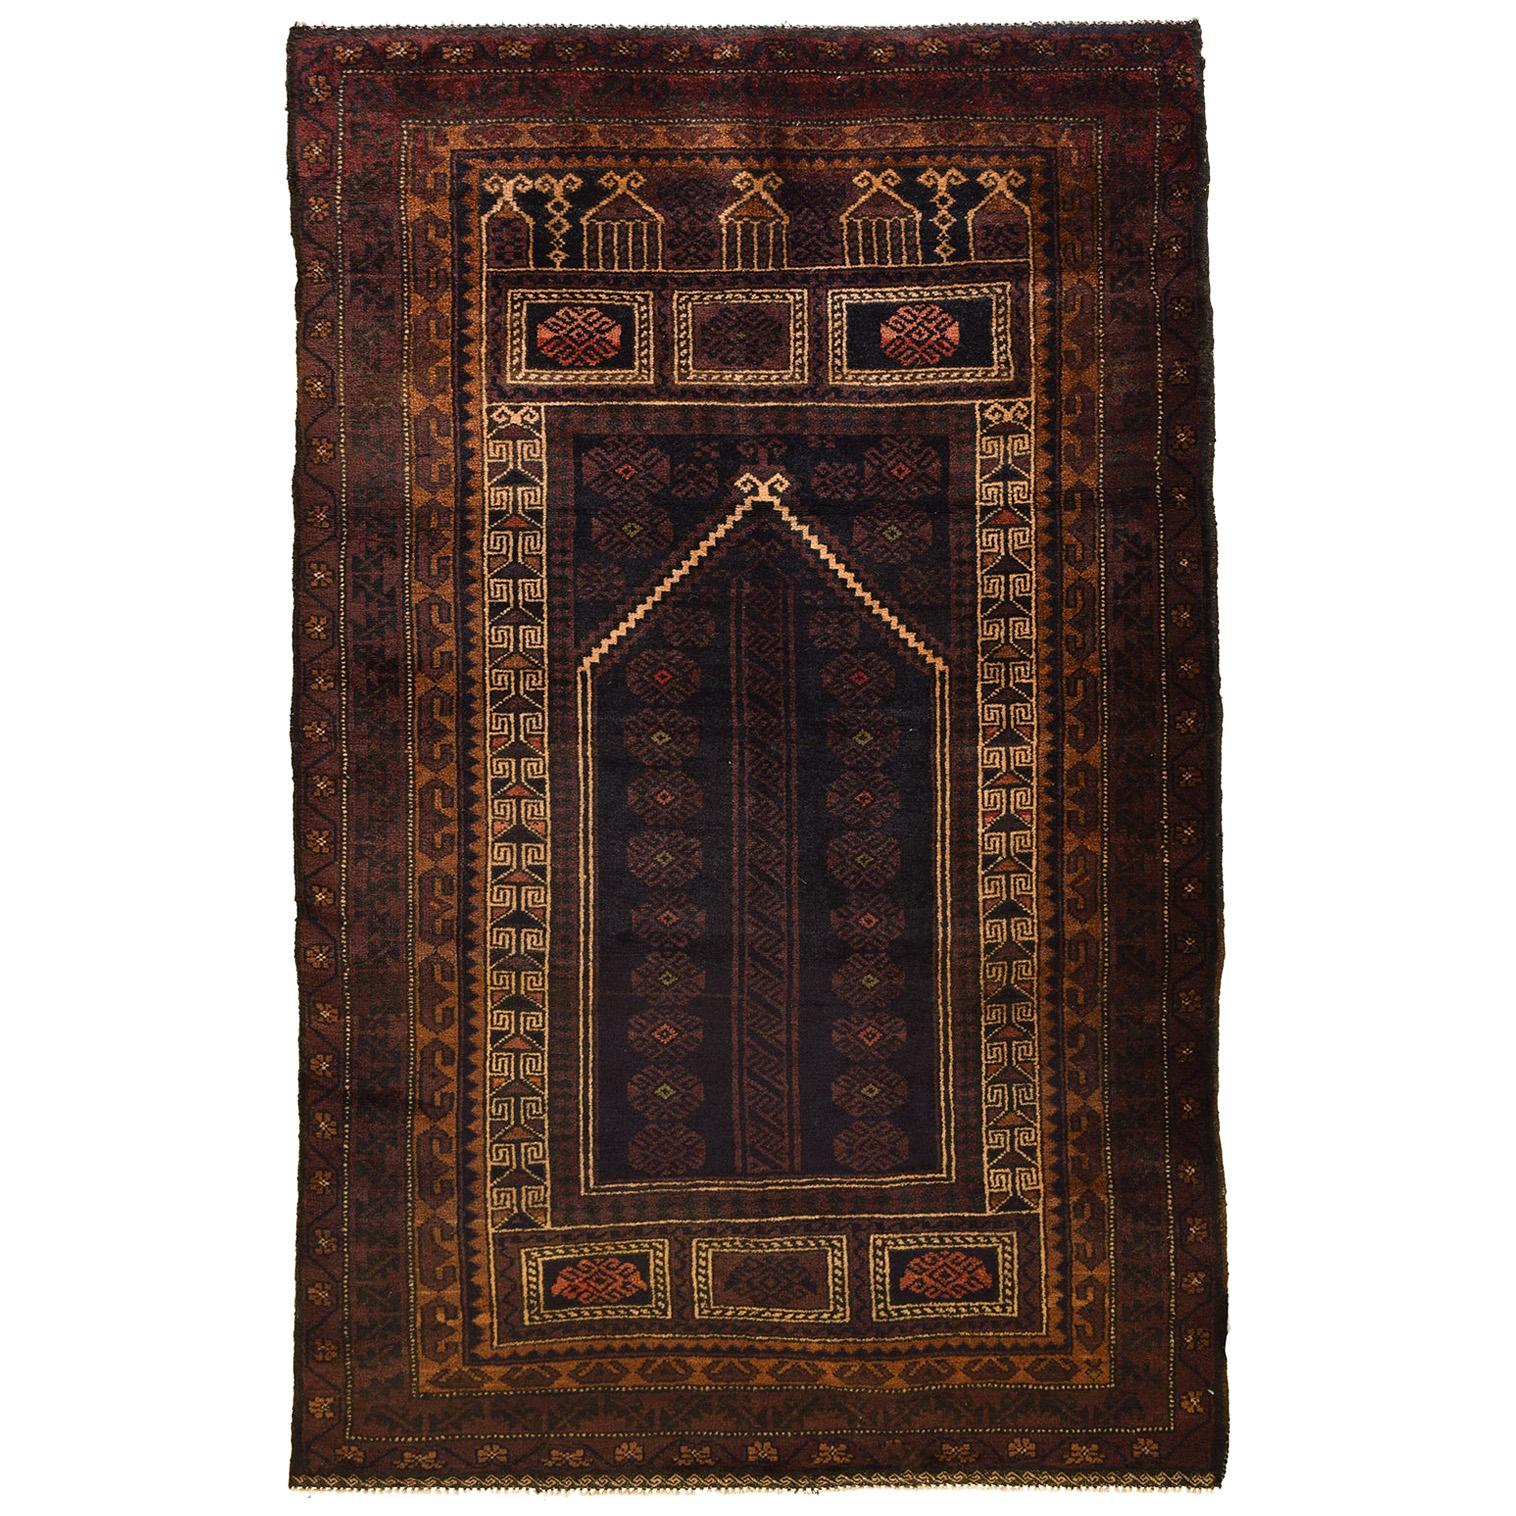 Traditional Persian Balouchi Carpet in Cream, Orange, Brown, and Black Wool